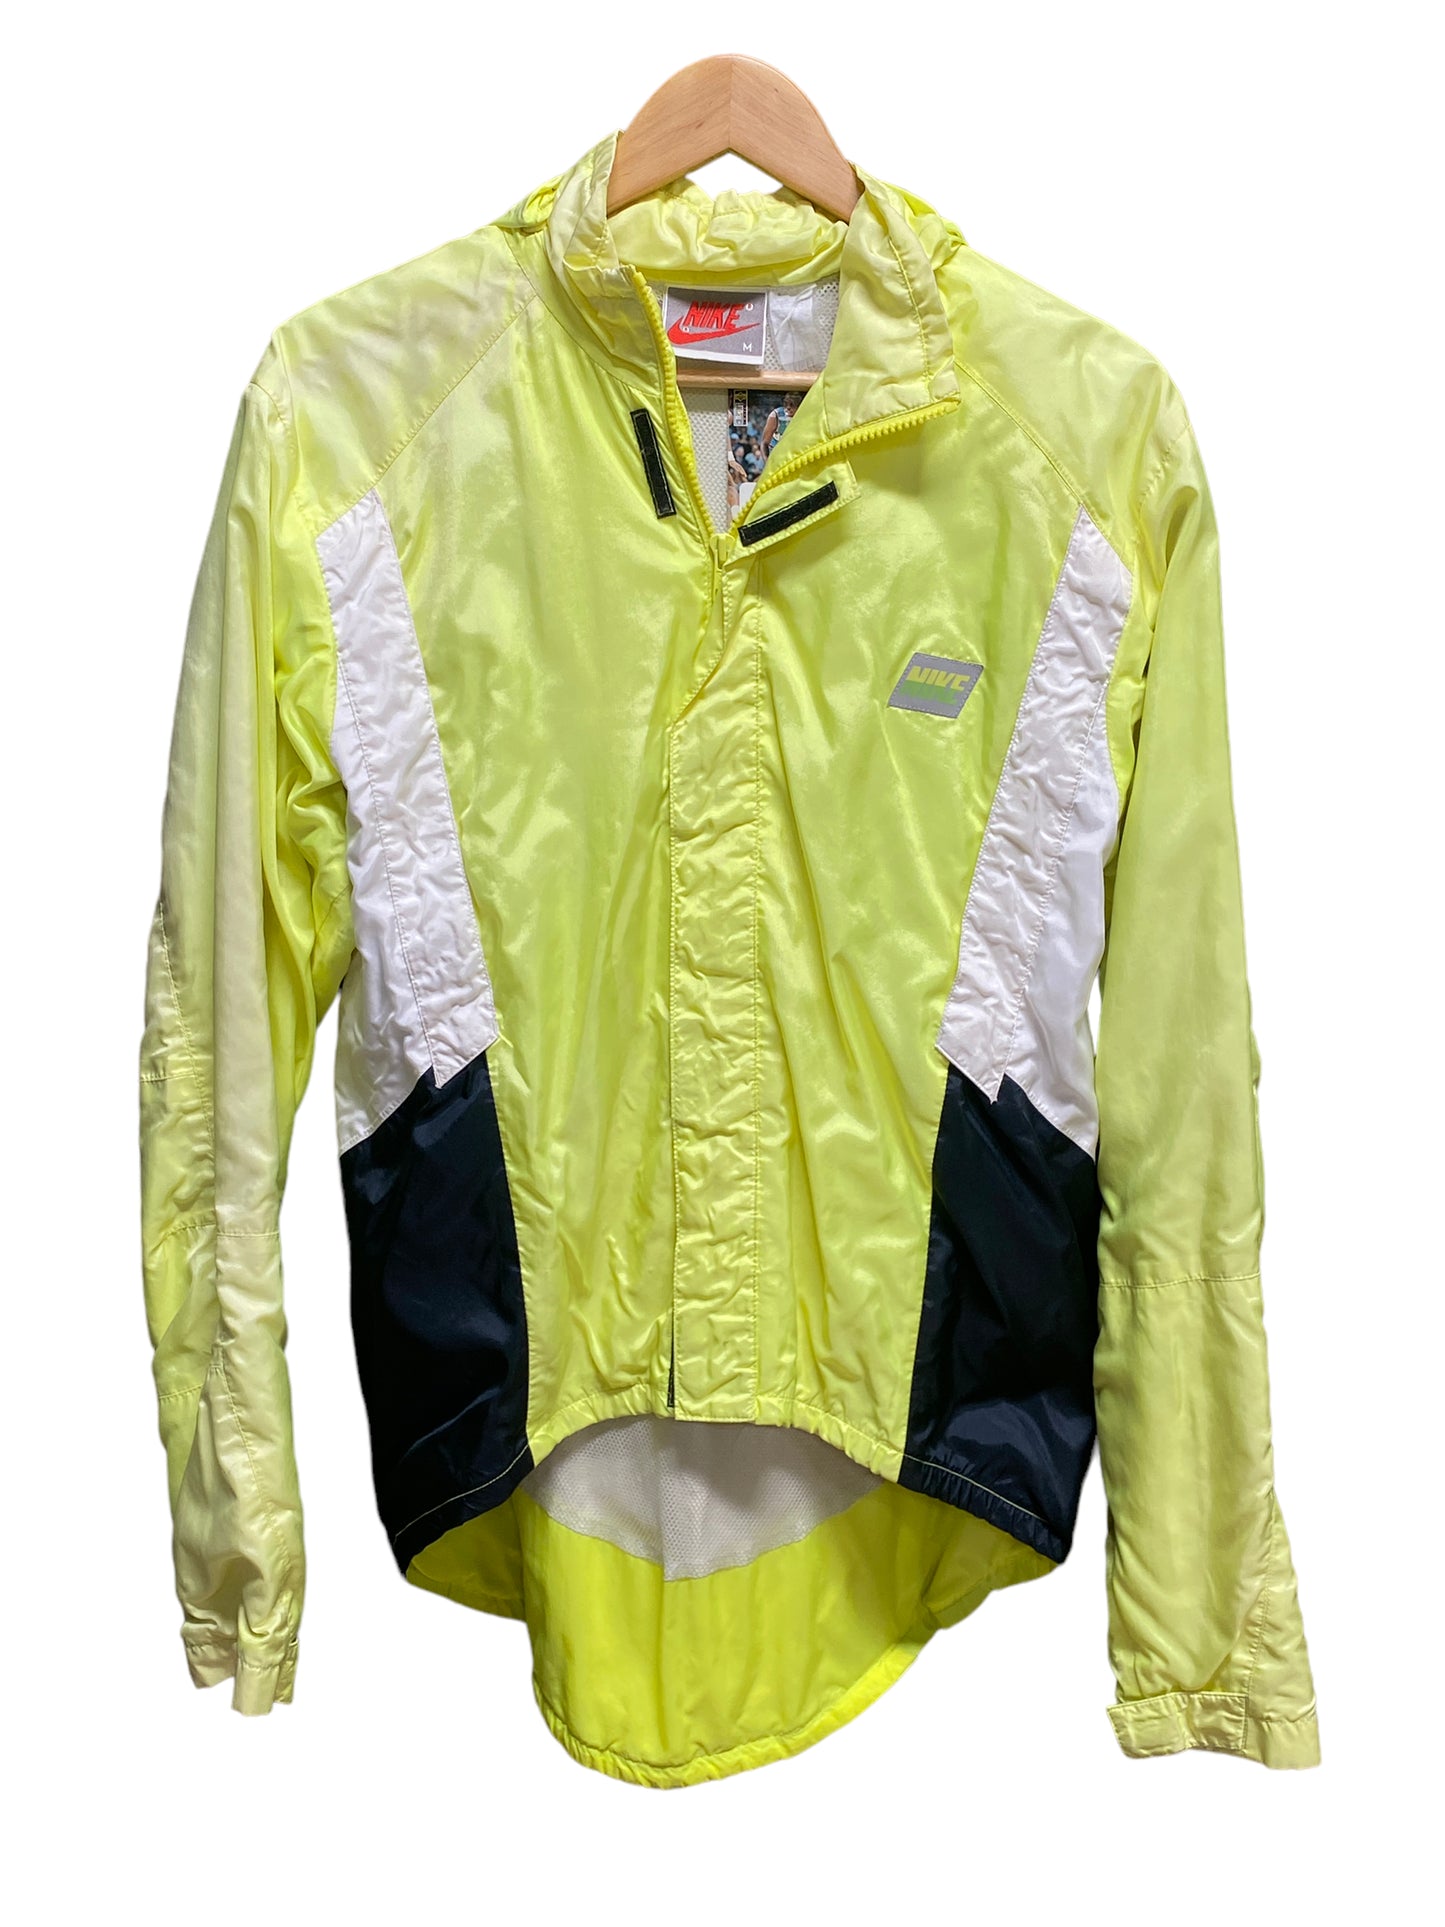 Vintage 90's Nike Silver Tag Cycling Jacket Windbreaker Size Medium